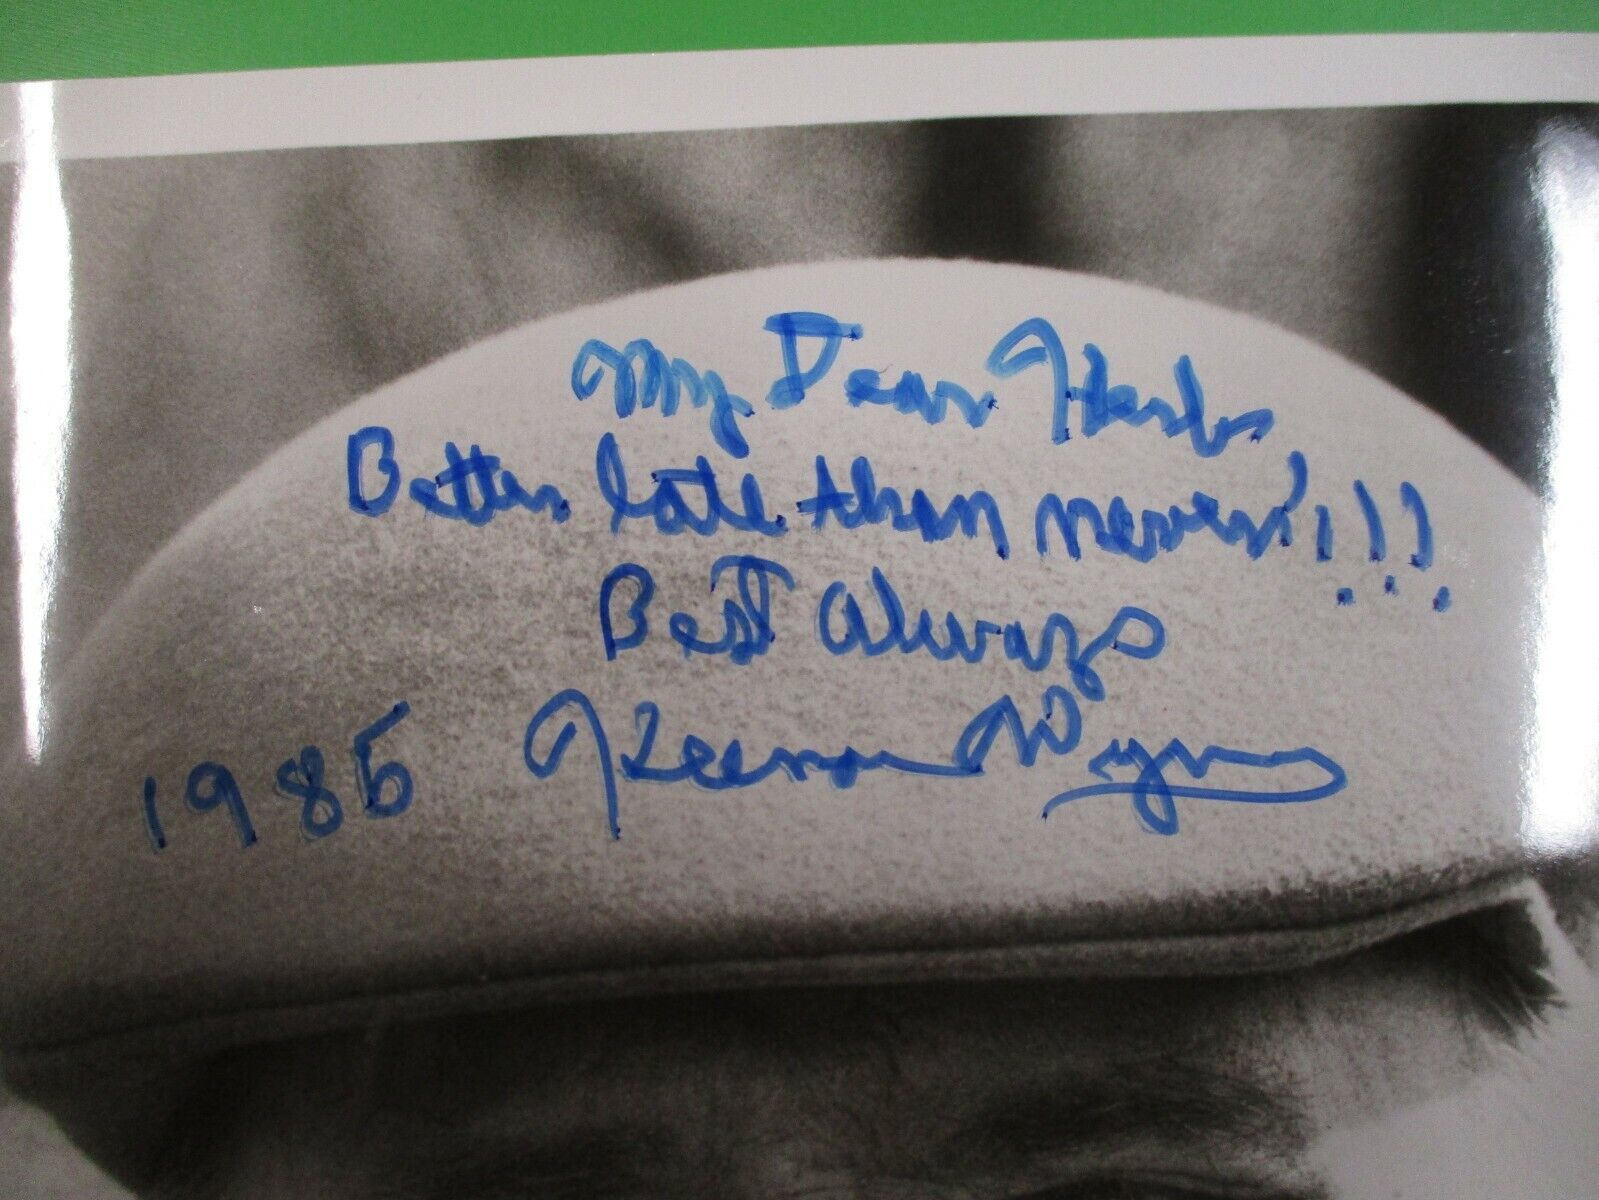 Keenan Wynn 1985 Personalization Signed Autographed 8x10 B&W Photo PSA